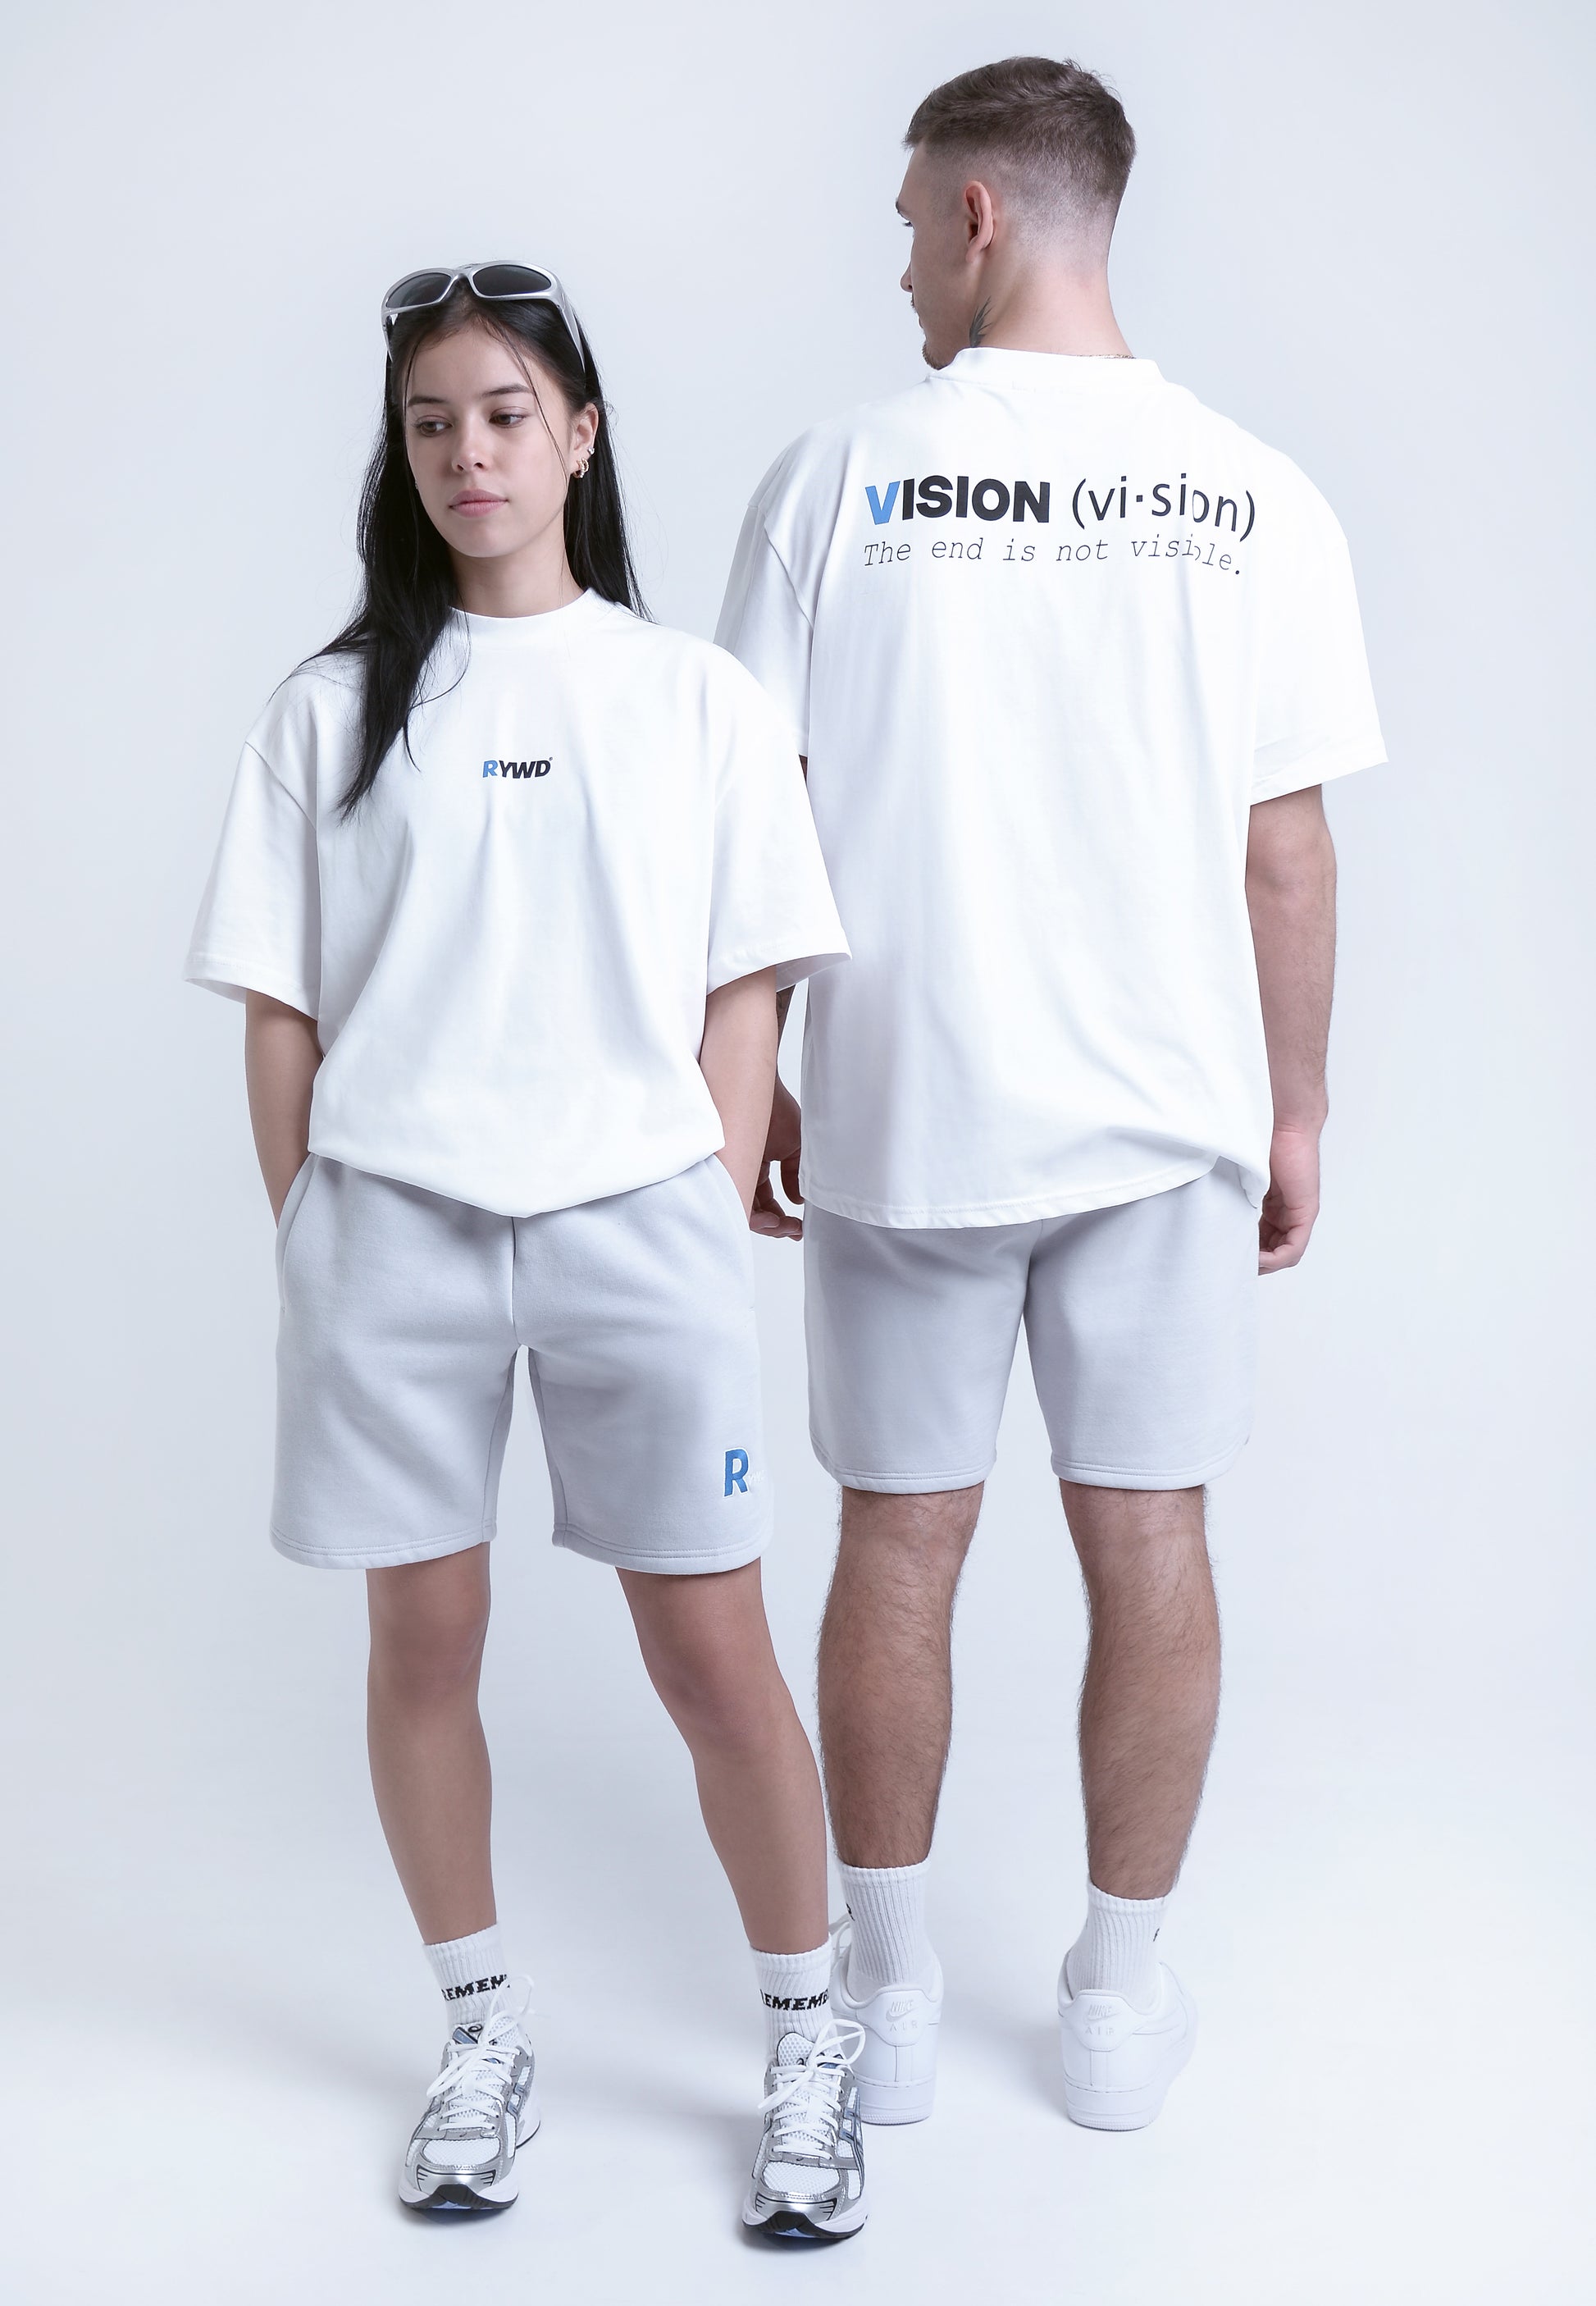 RYWD Vision T-Shirt white 2 unisex oversize streetwear